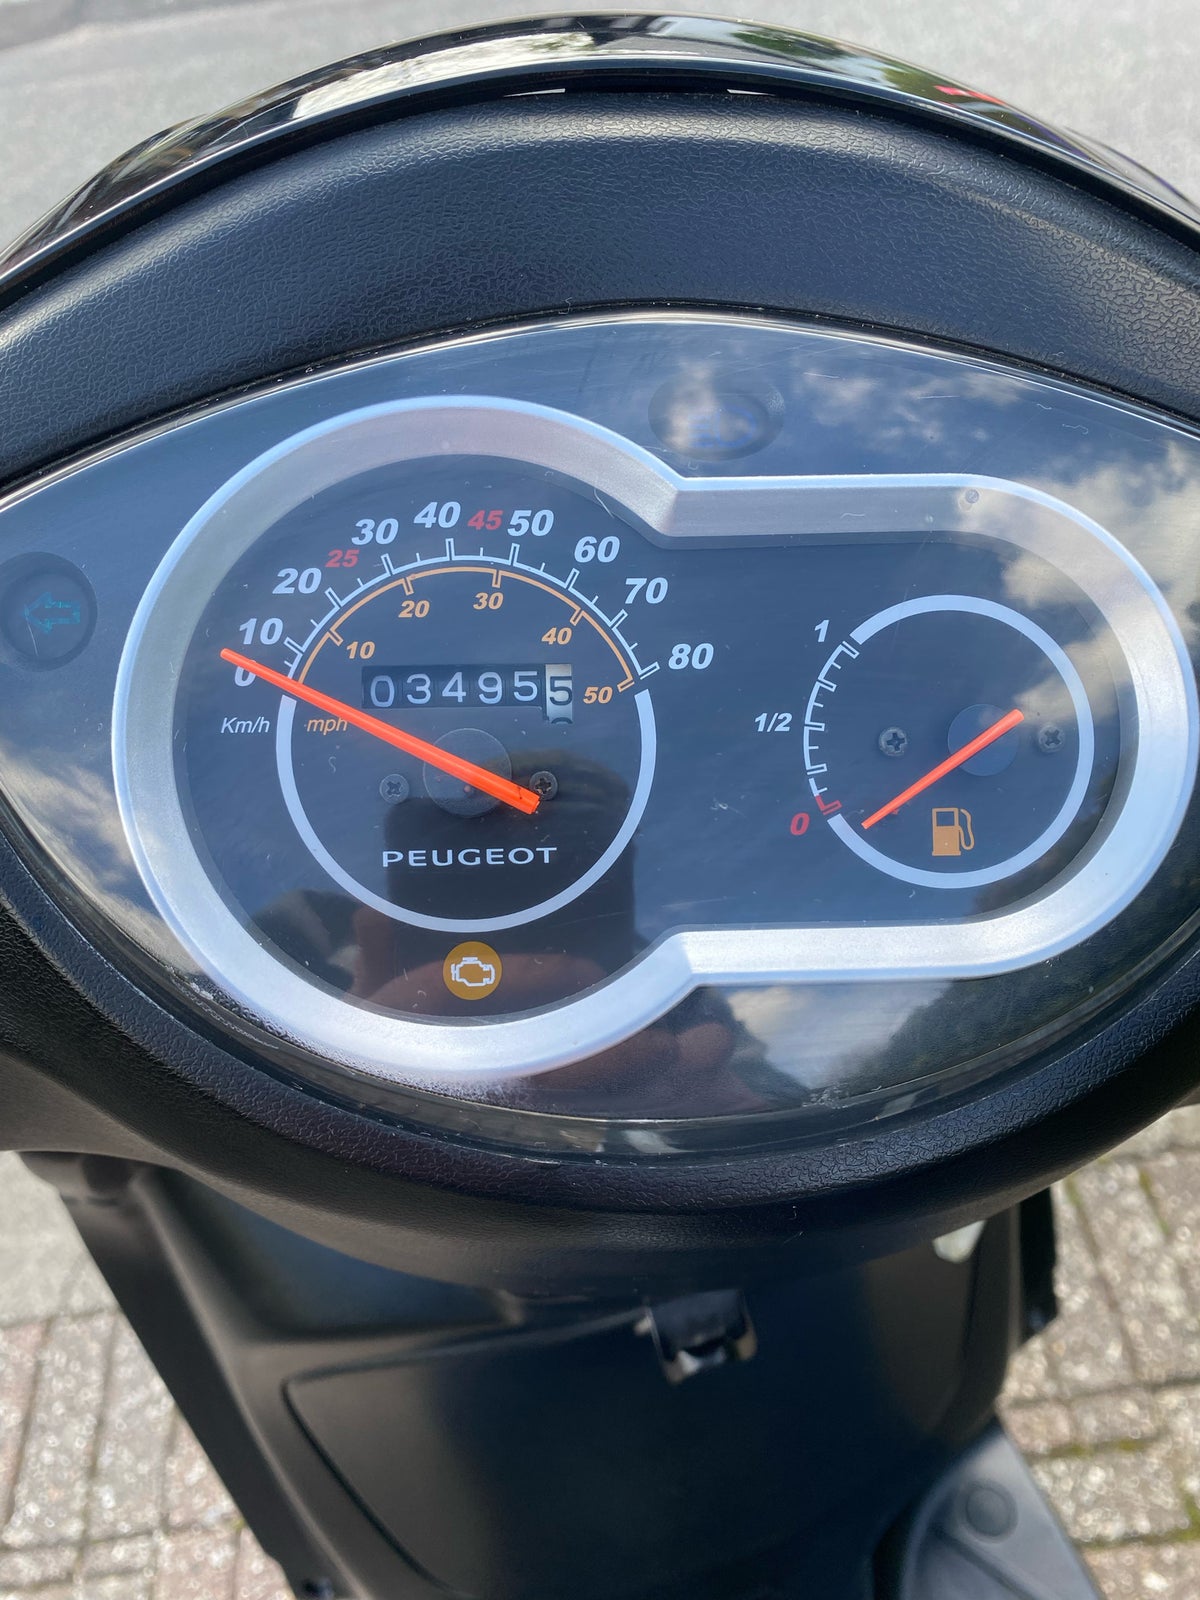 Peugeot Peugeot Tweet, 2019, 3495 km